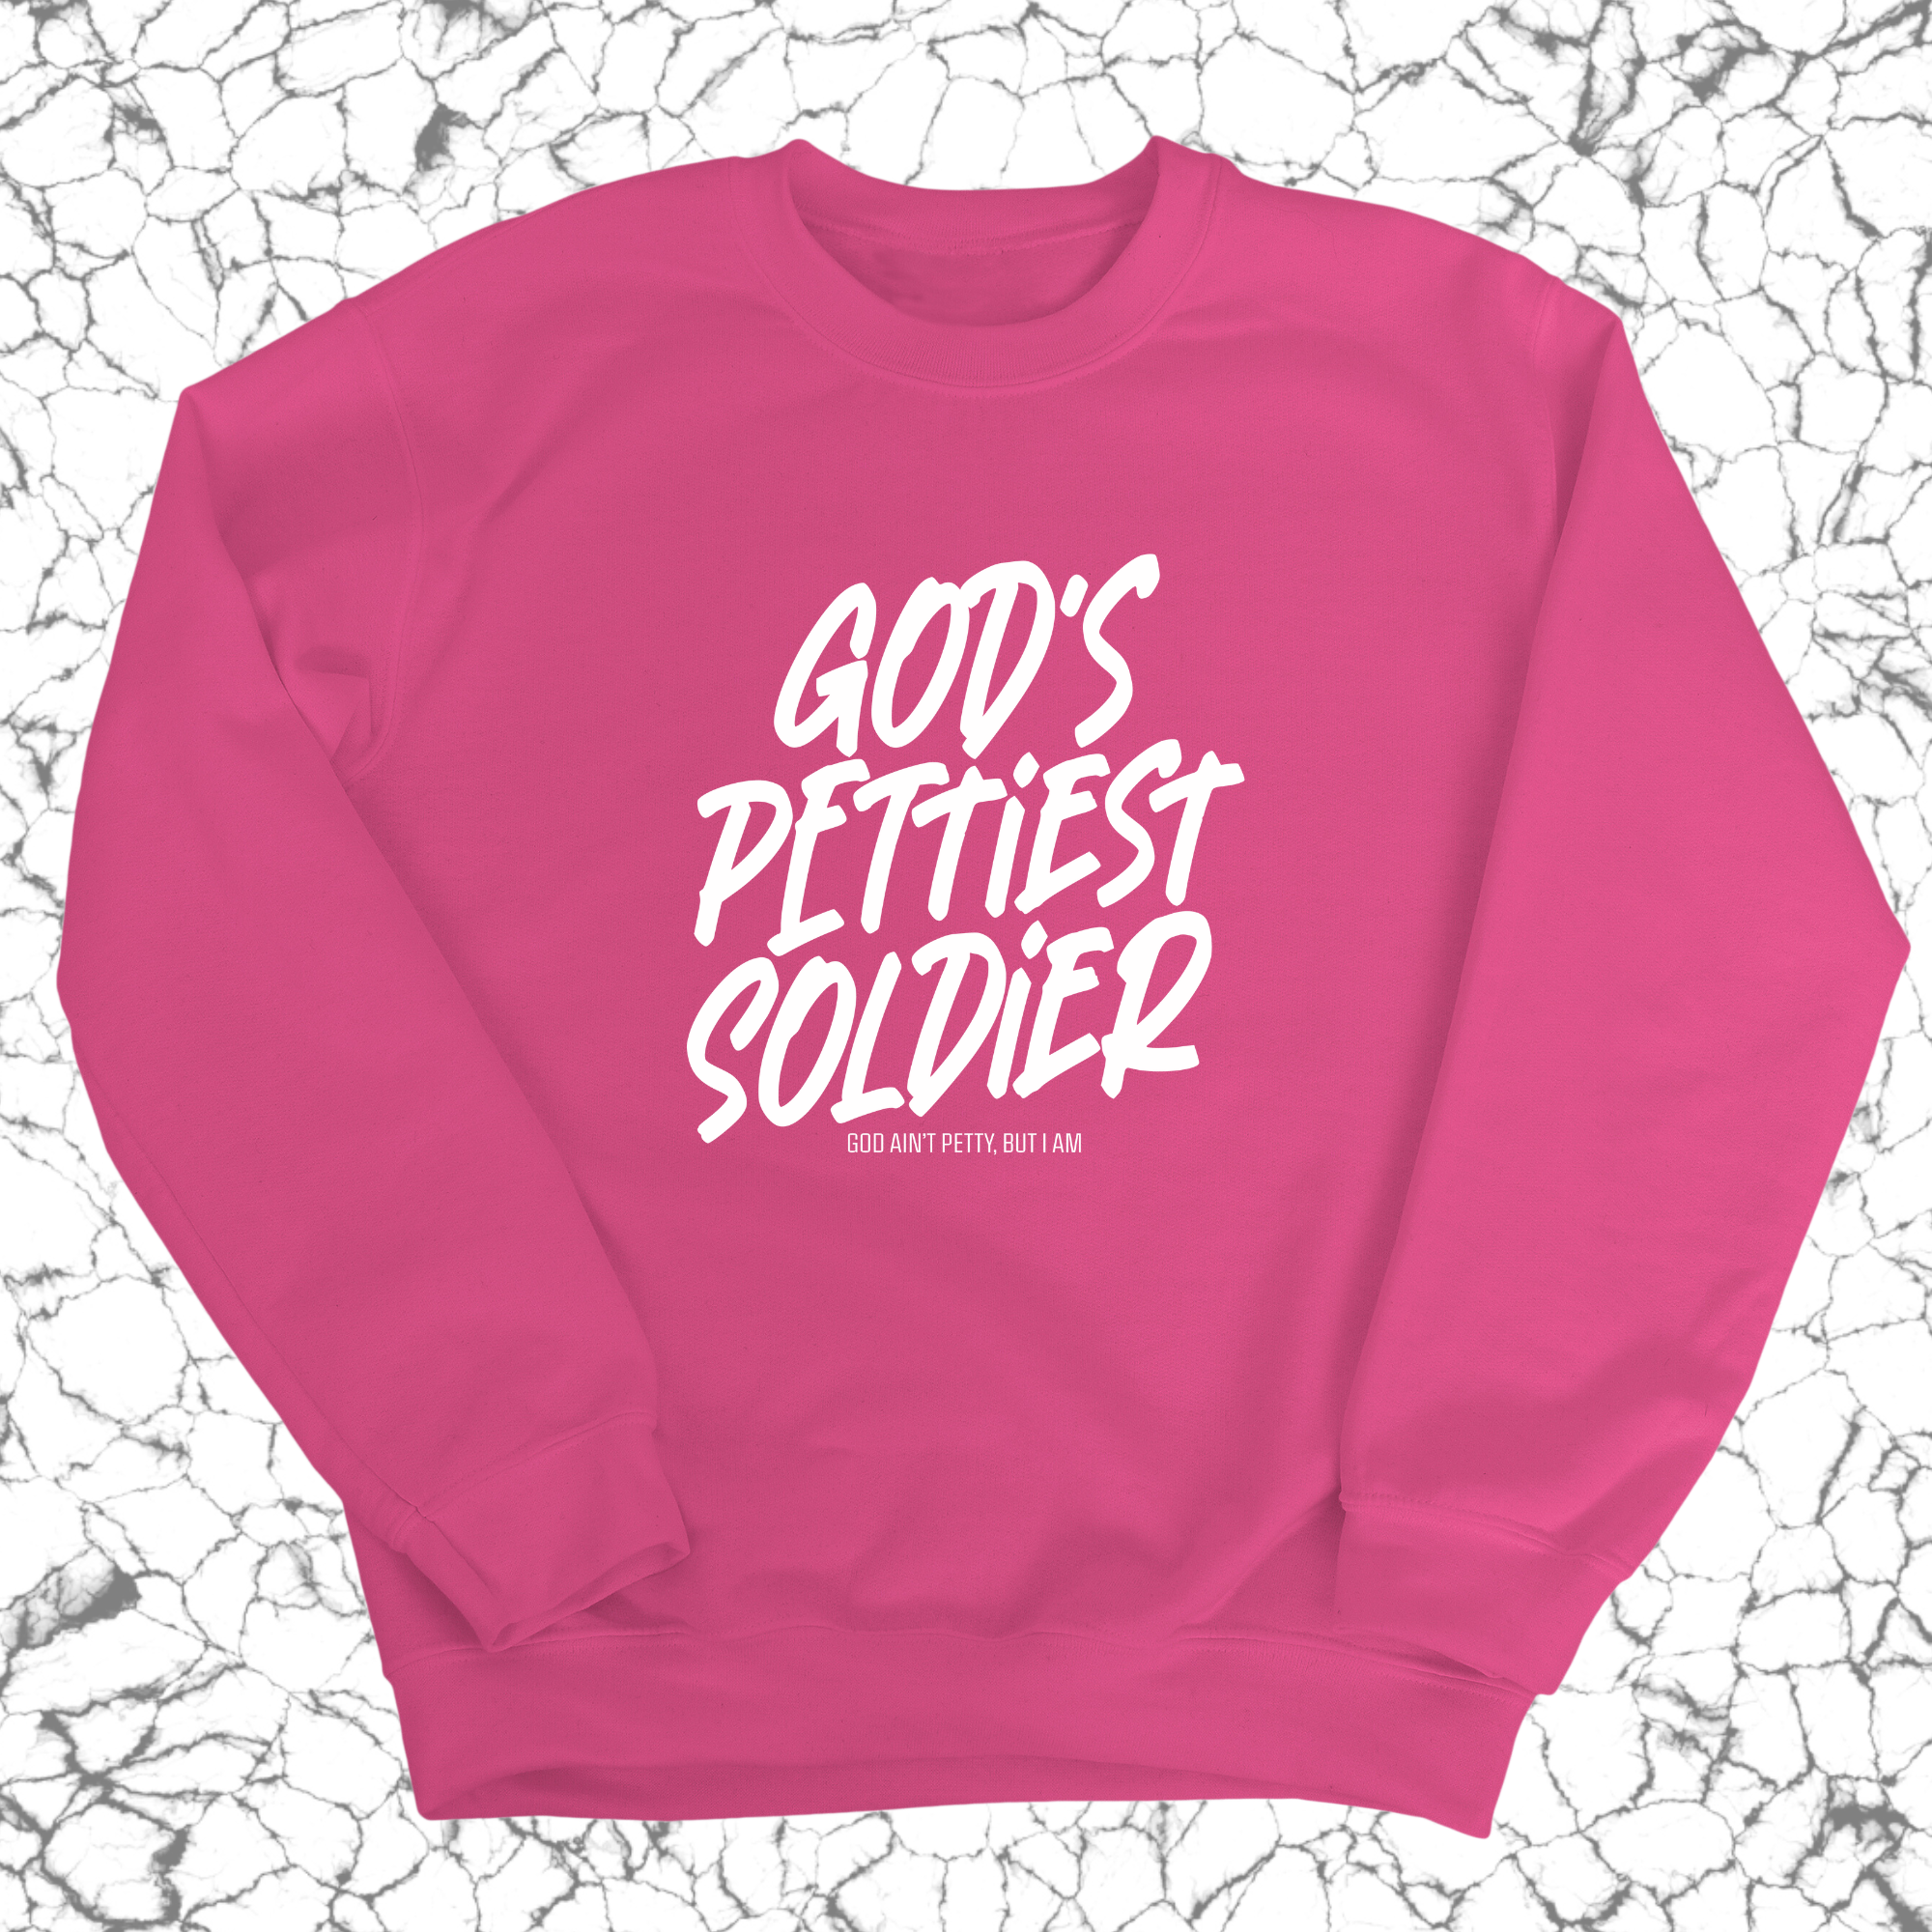 God's Pettiest Soldier Unisex Sweatshirt-Sweatshirt-The Original God Ain't Petty But I Am